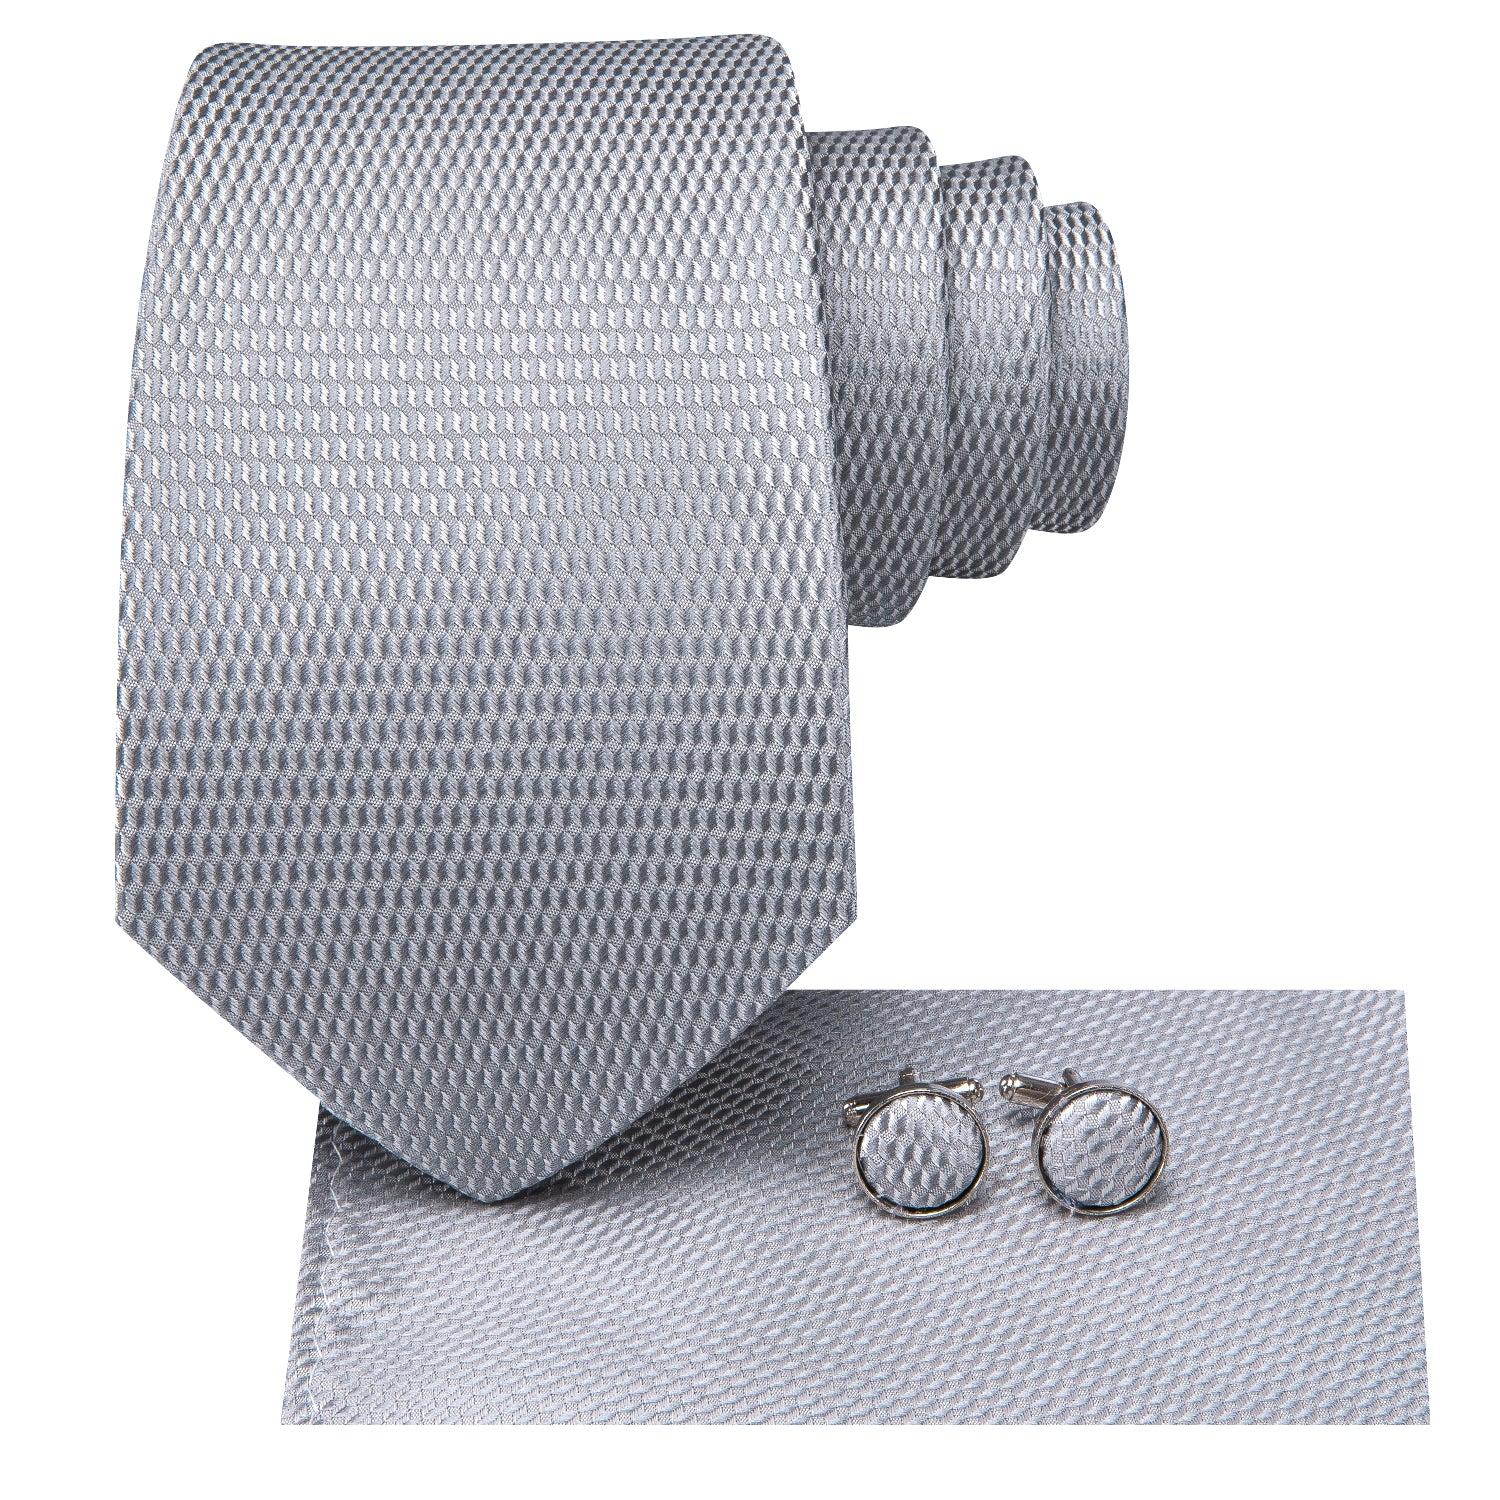 Hi-Tie Grey Geometric Men's Tie Pocket Square Cufflinks Set